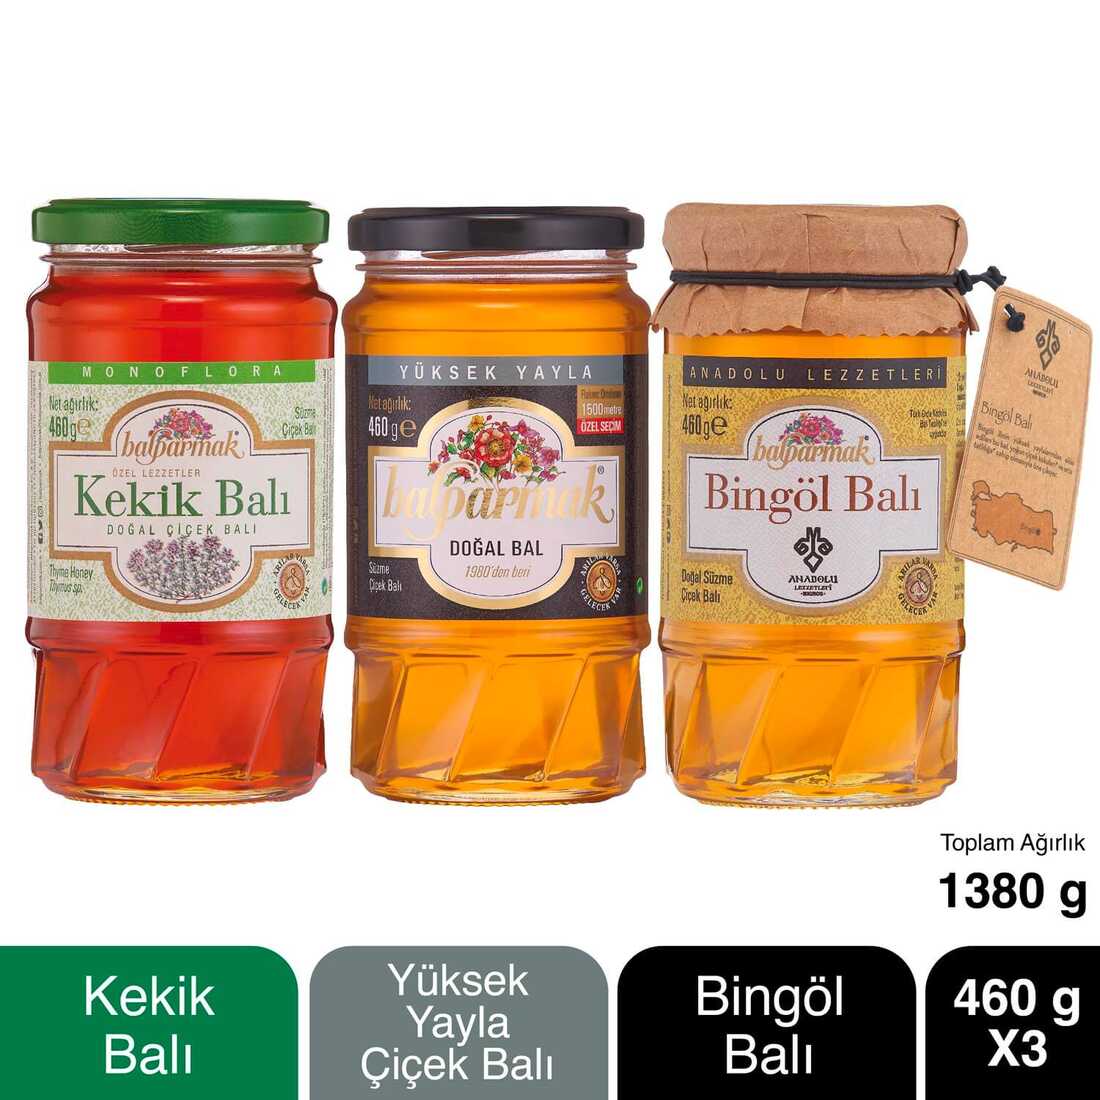 balparmak honey package oregano and high plateau and bingol 1